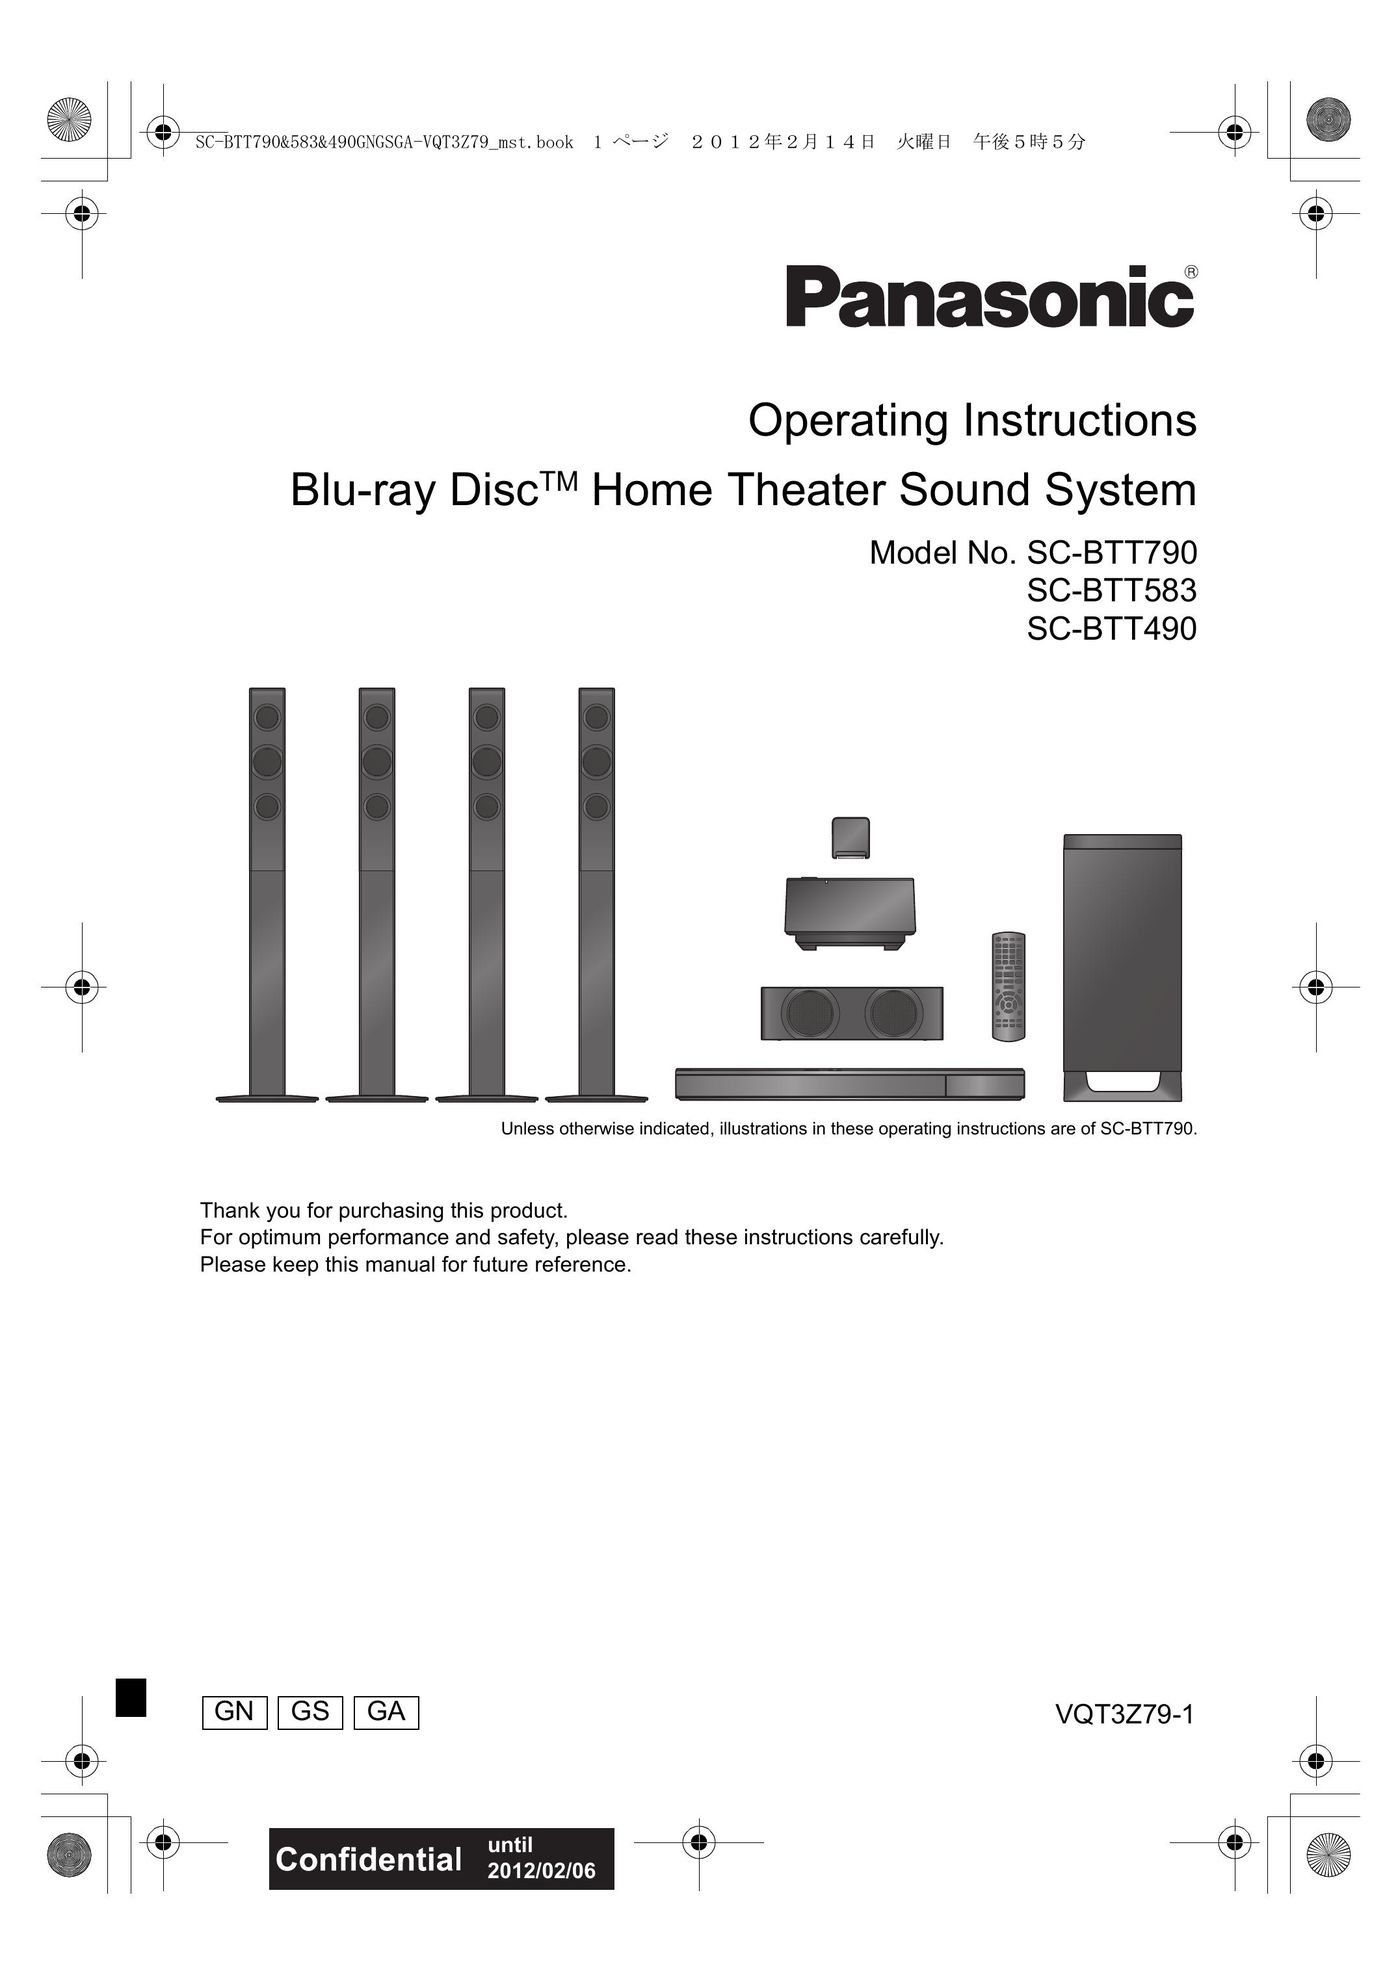 Panasonic SC-BTT490 Home Theater System User Manual